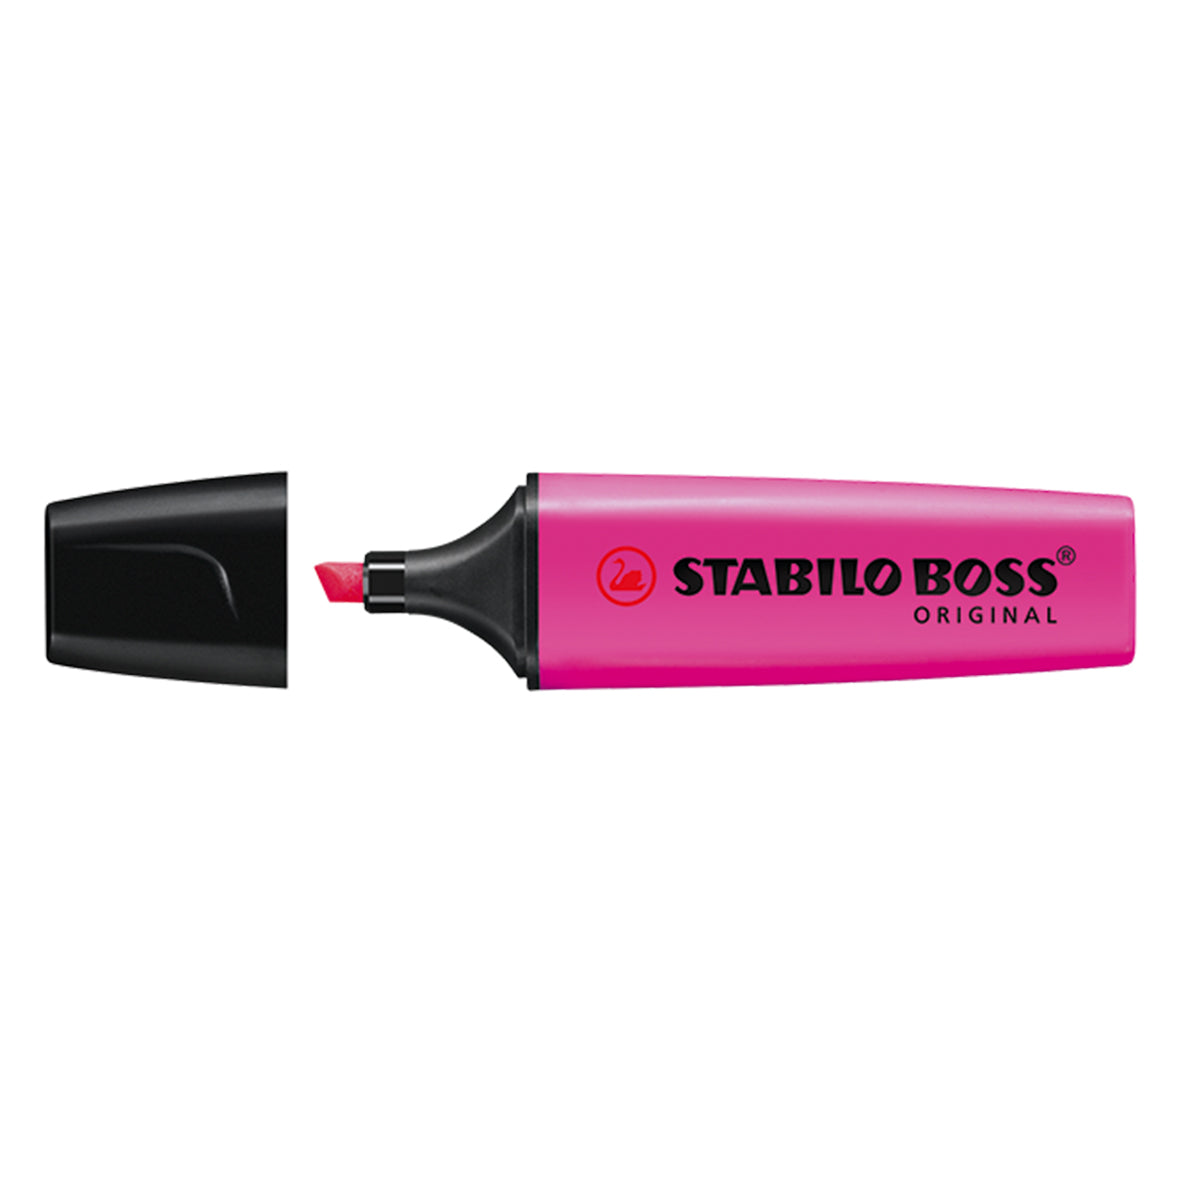 Stabilo Boss Textmarker "Original"